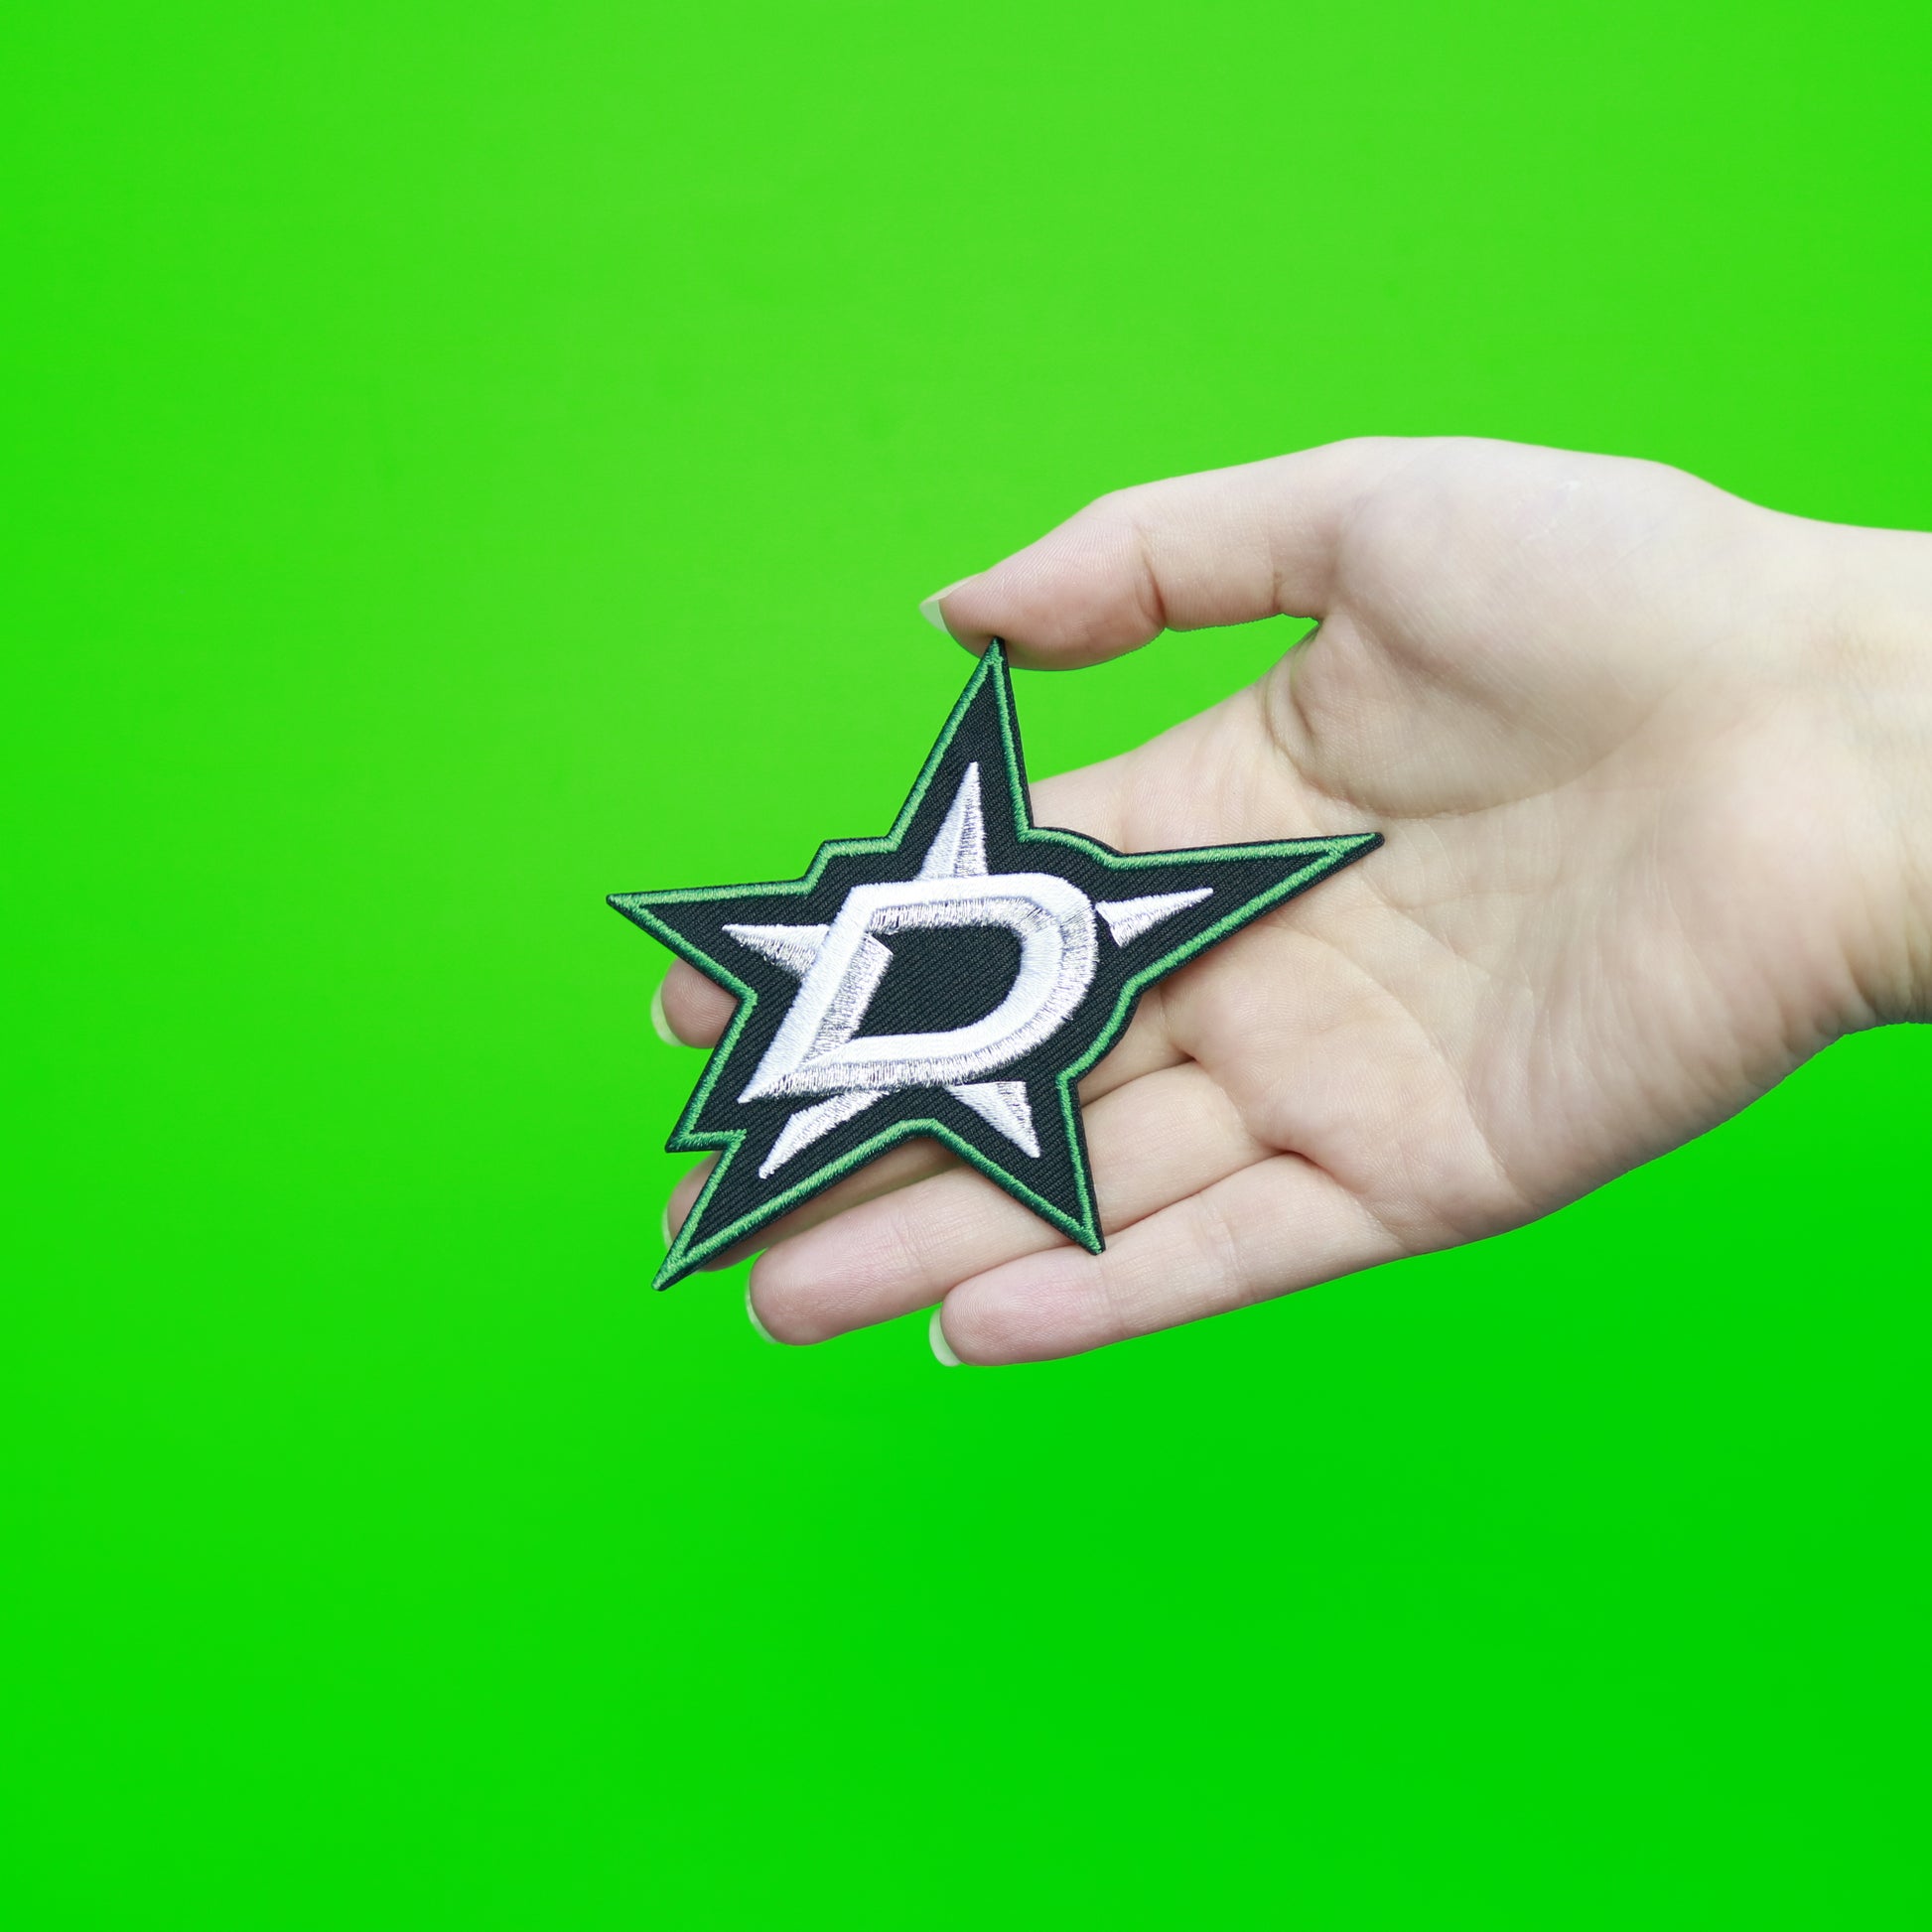 Dallas Stars Primary Team NHL Logo Patch (2013) 